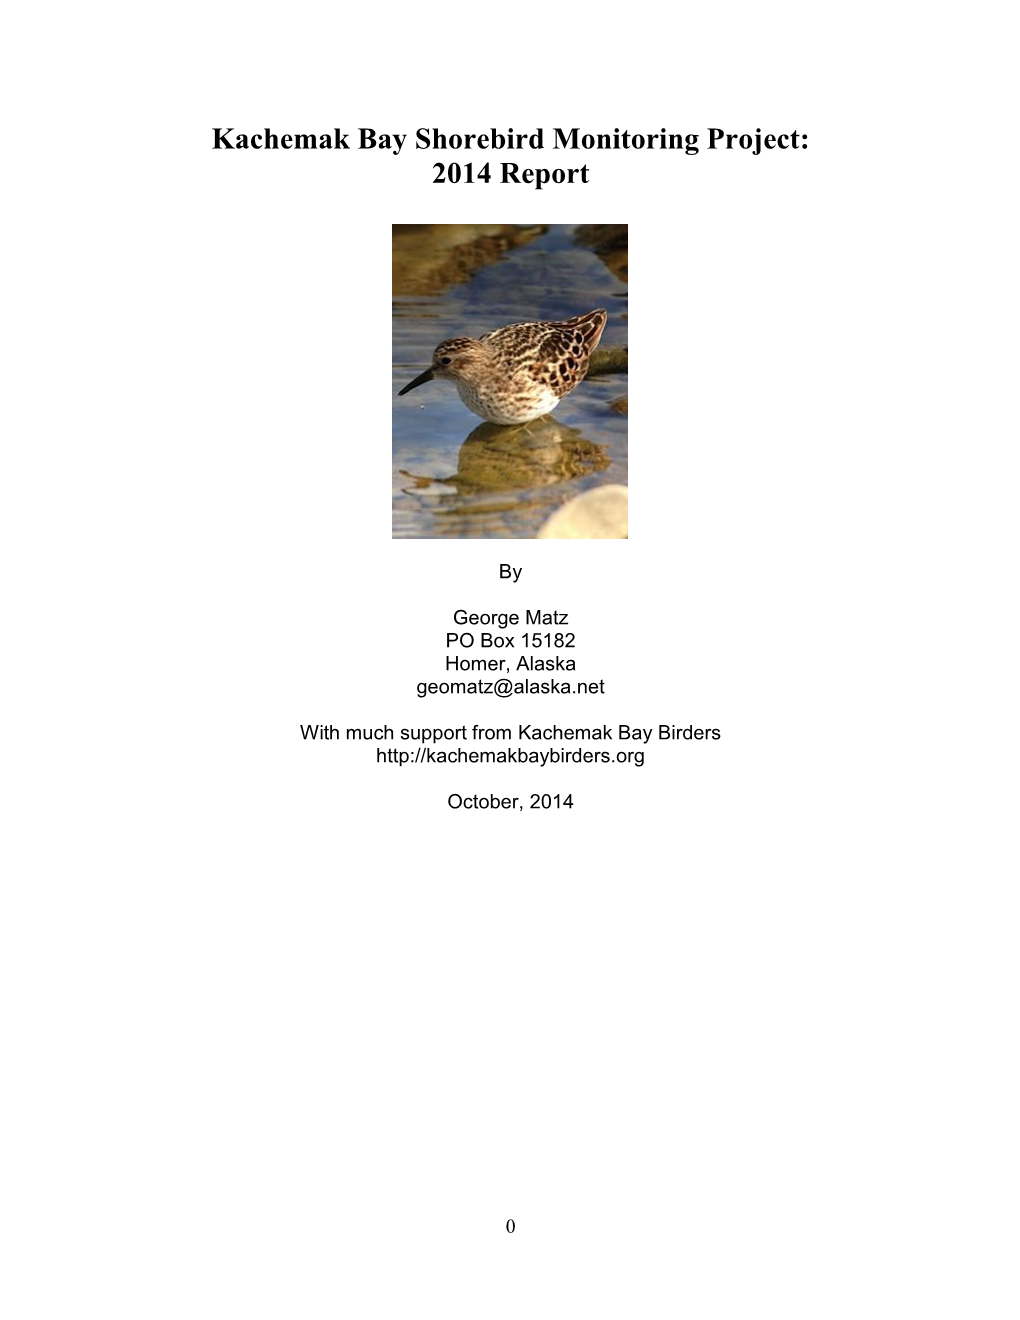 Kachemak Bay Shorebird Monitoring Project: 2014 Report